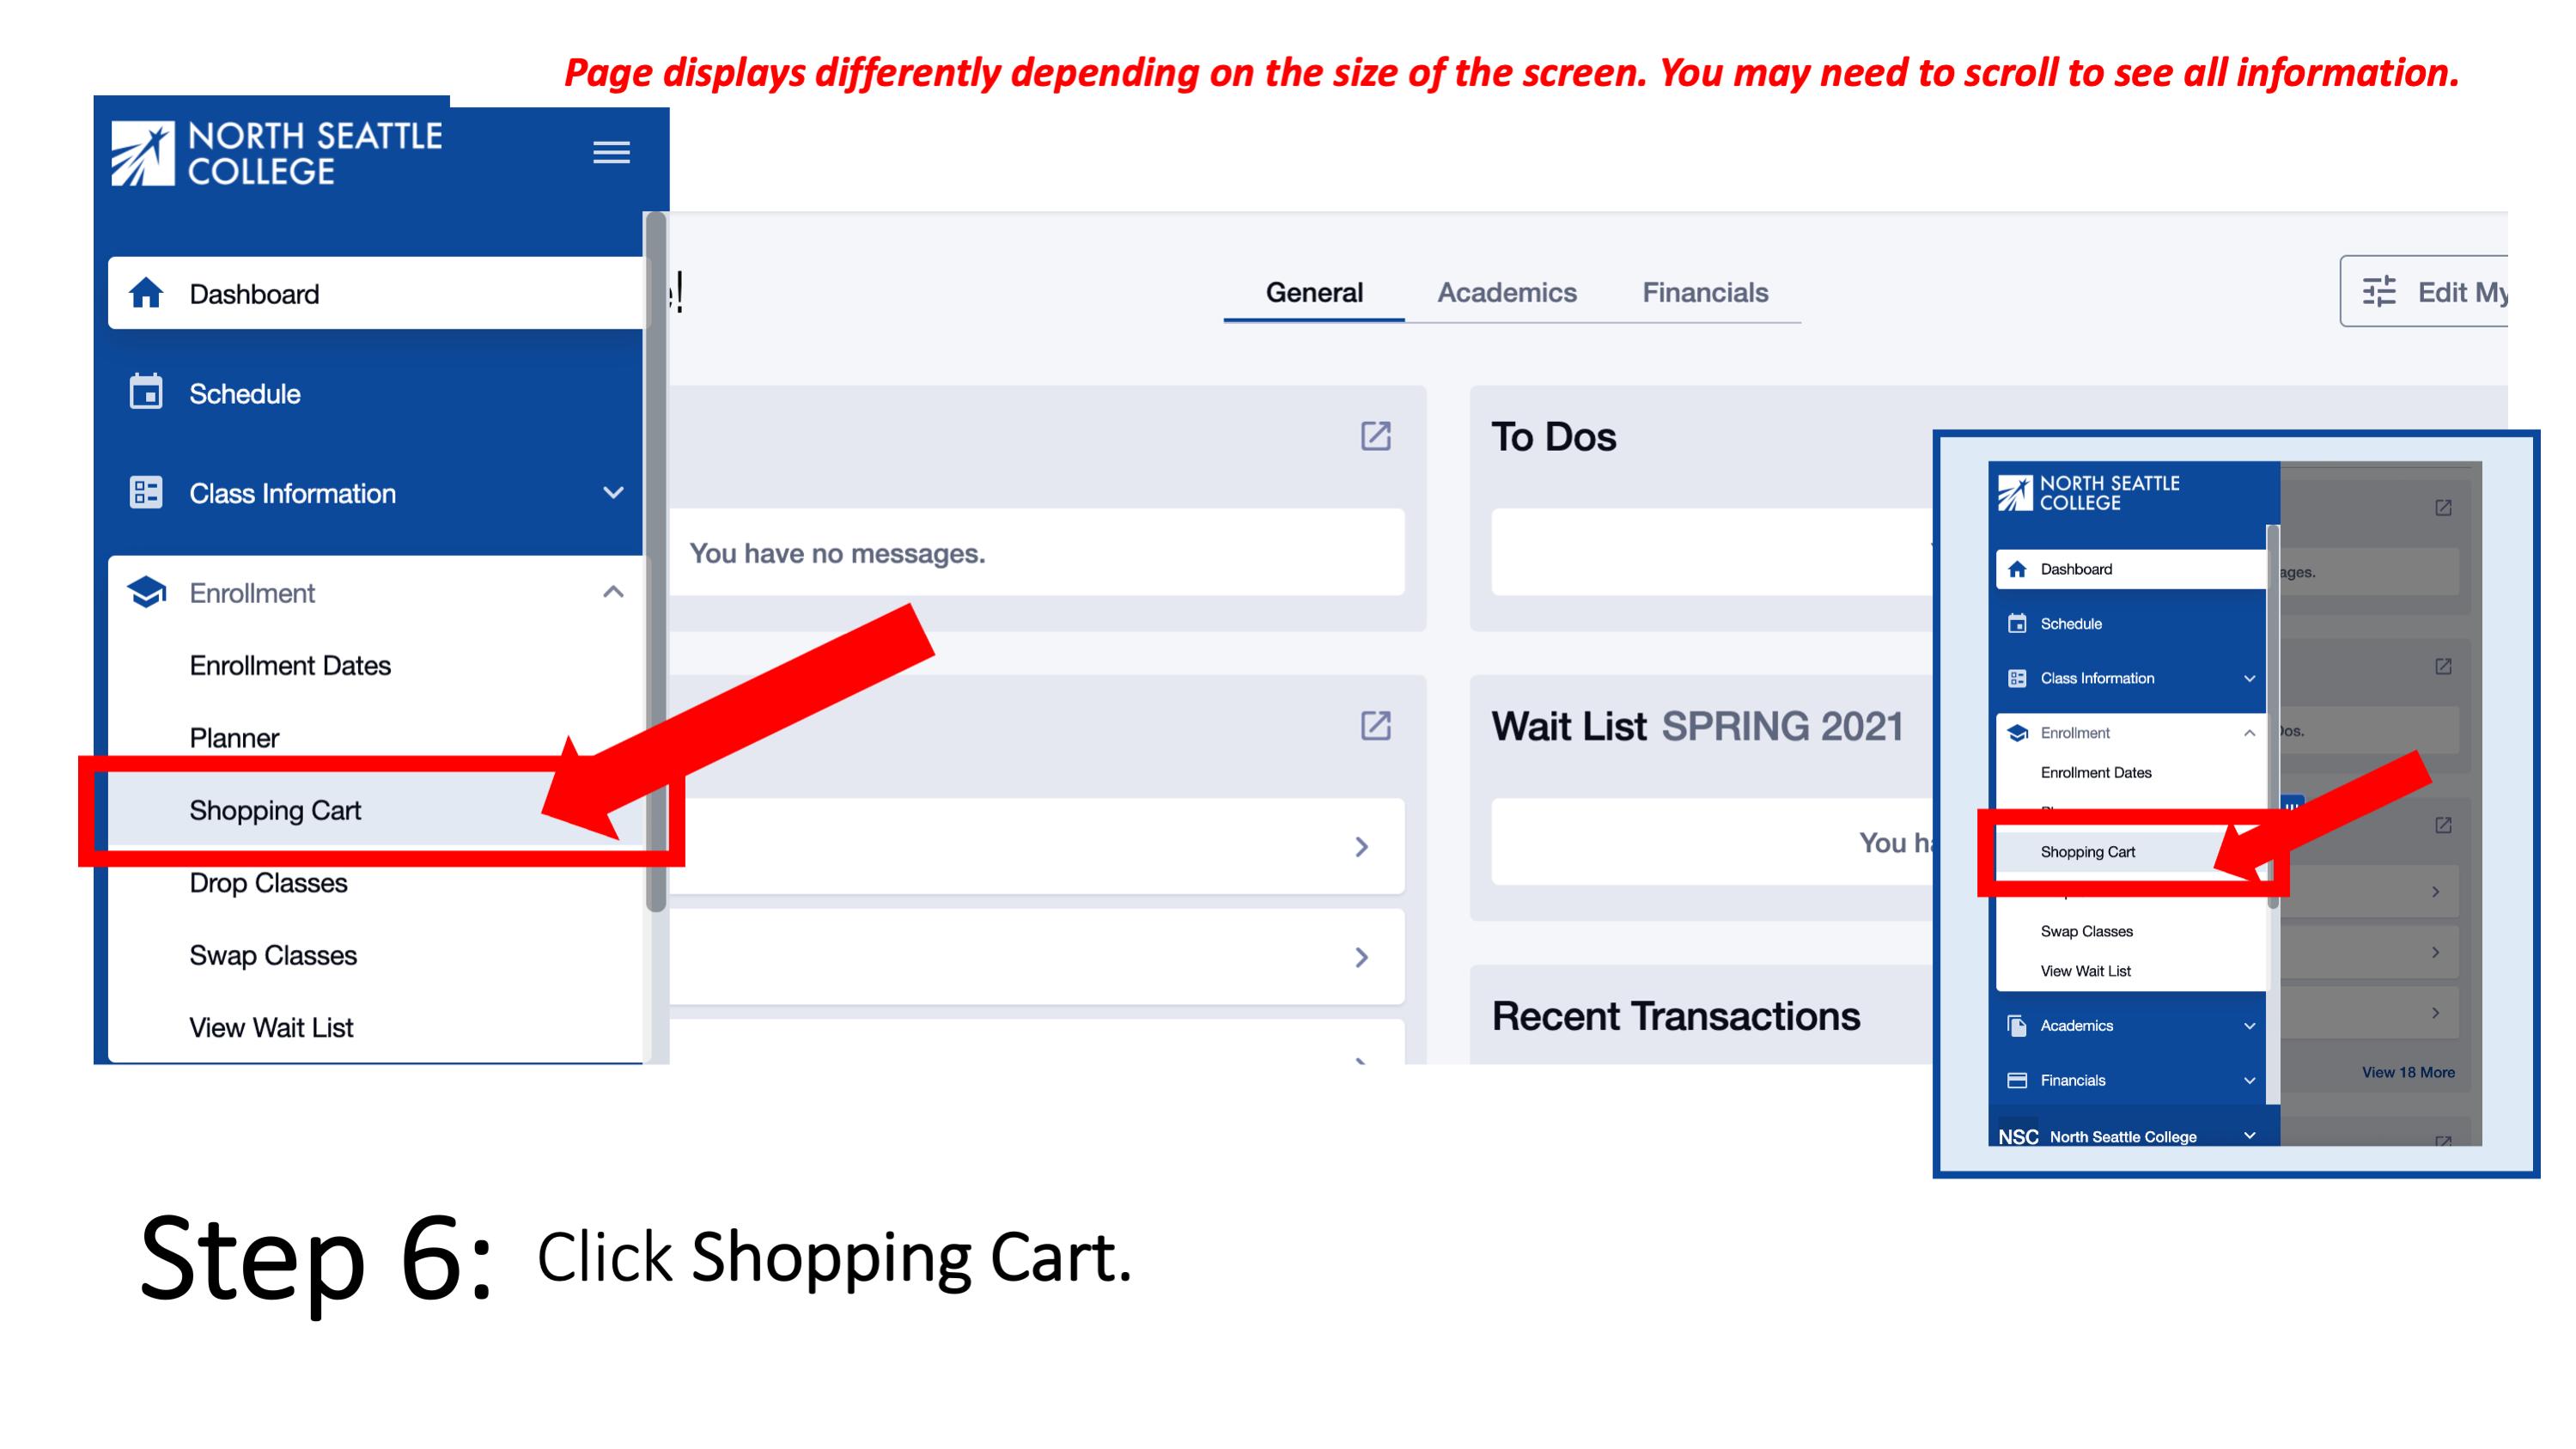 Step 6: Click Shopping Cart.